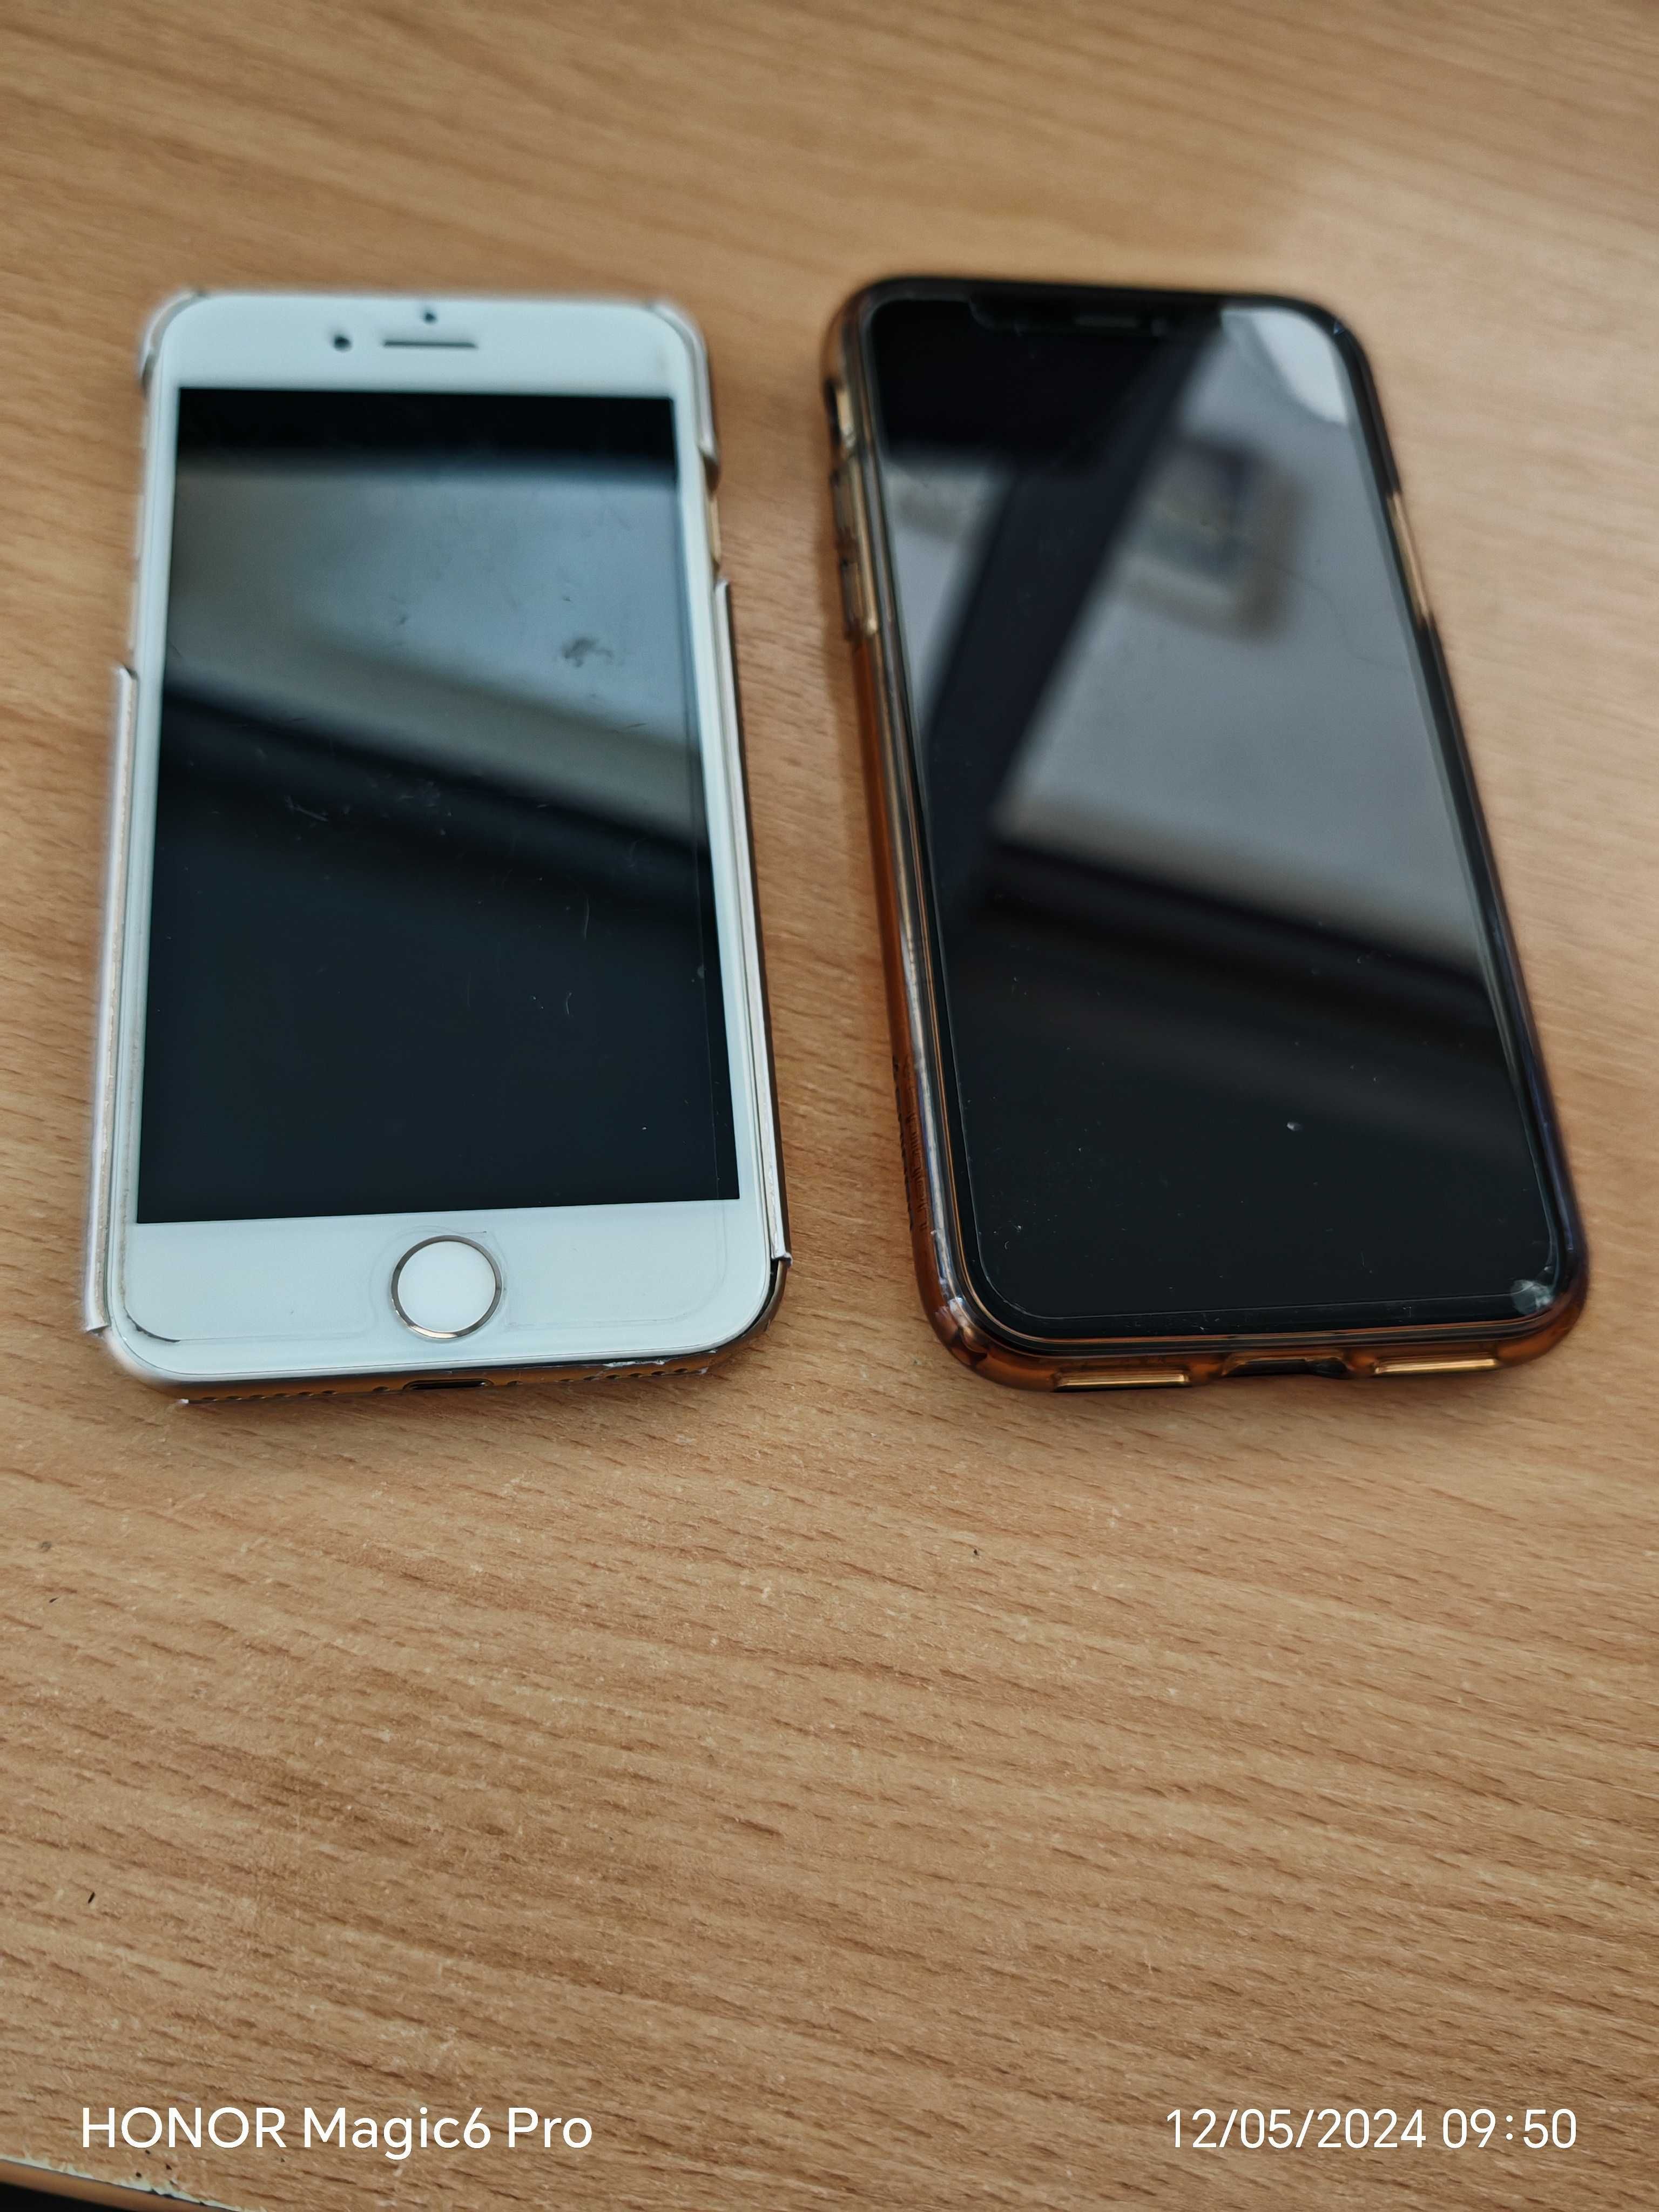 iPhone X 256 GB Silver и iPhone 7 32 GB Gold